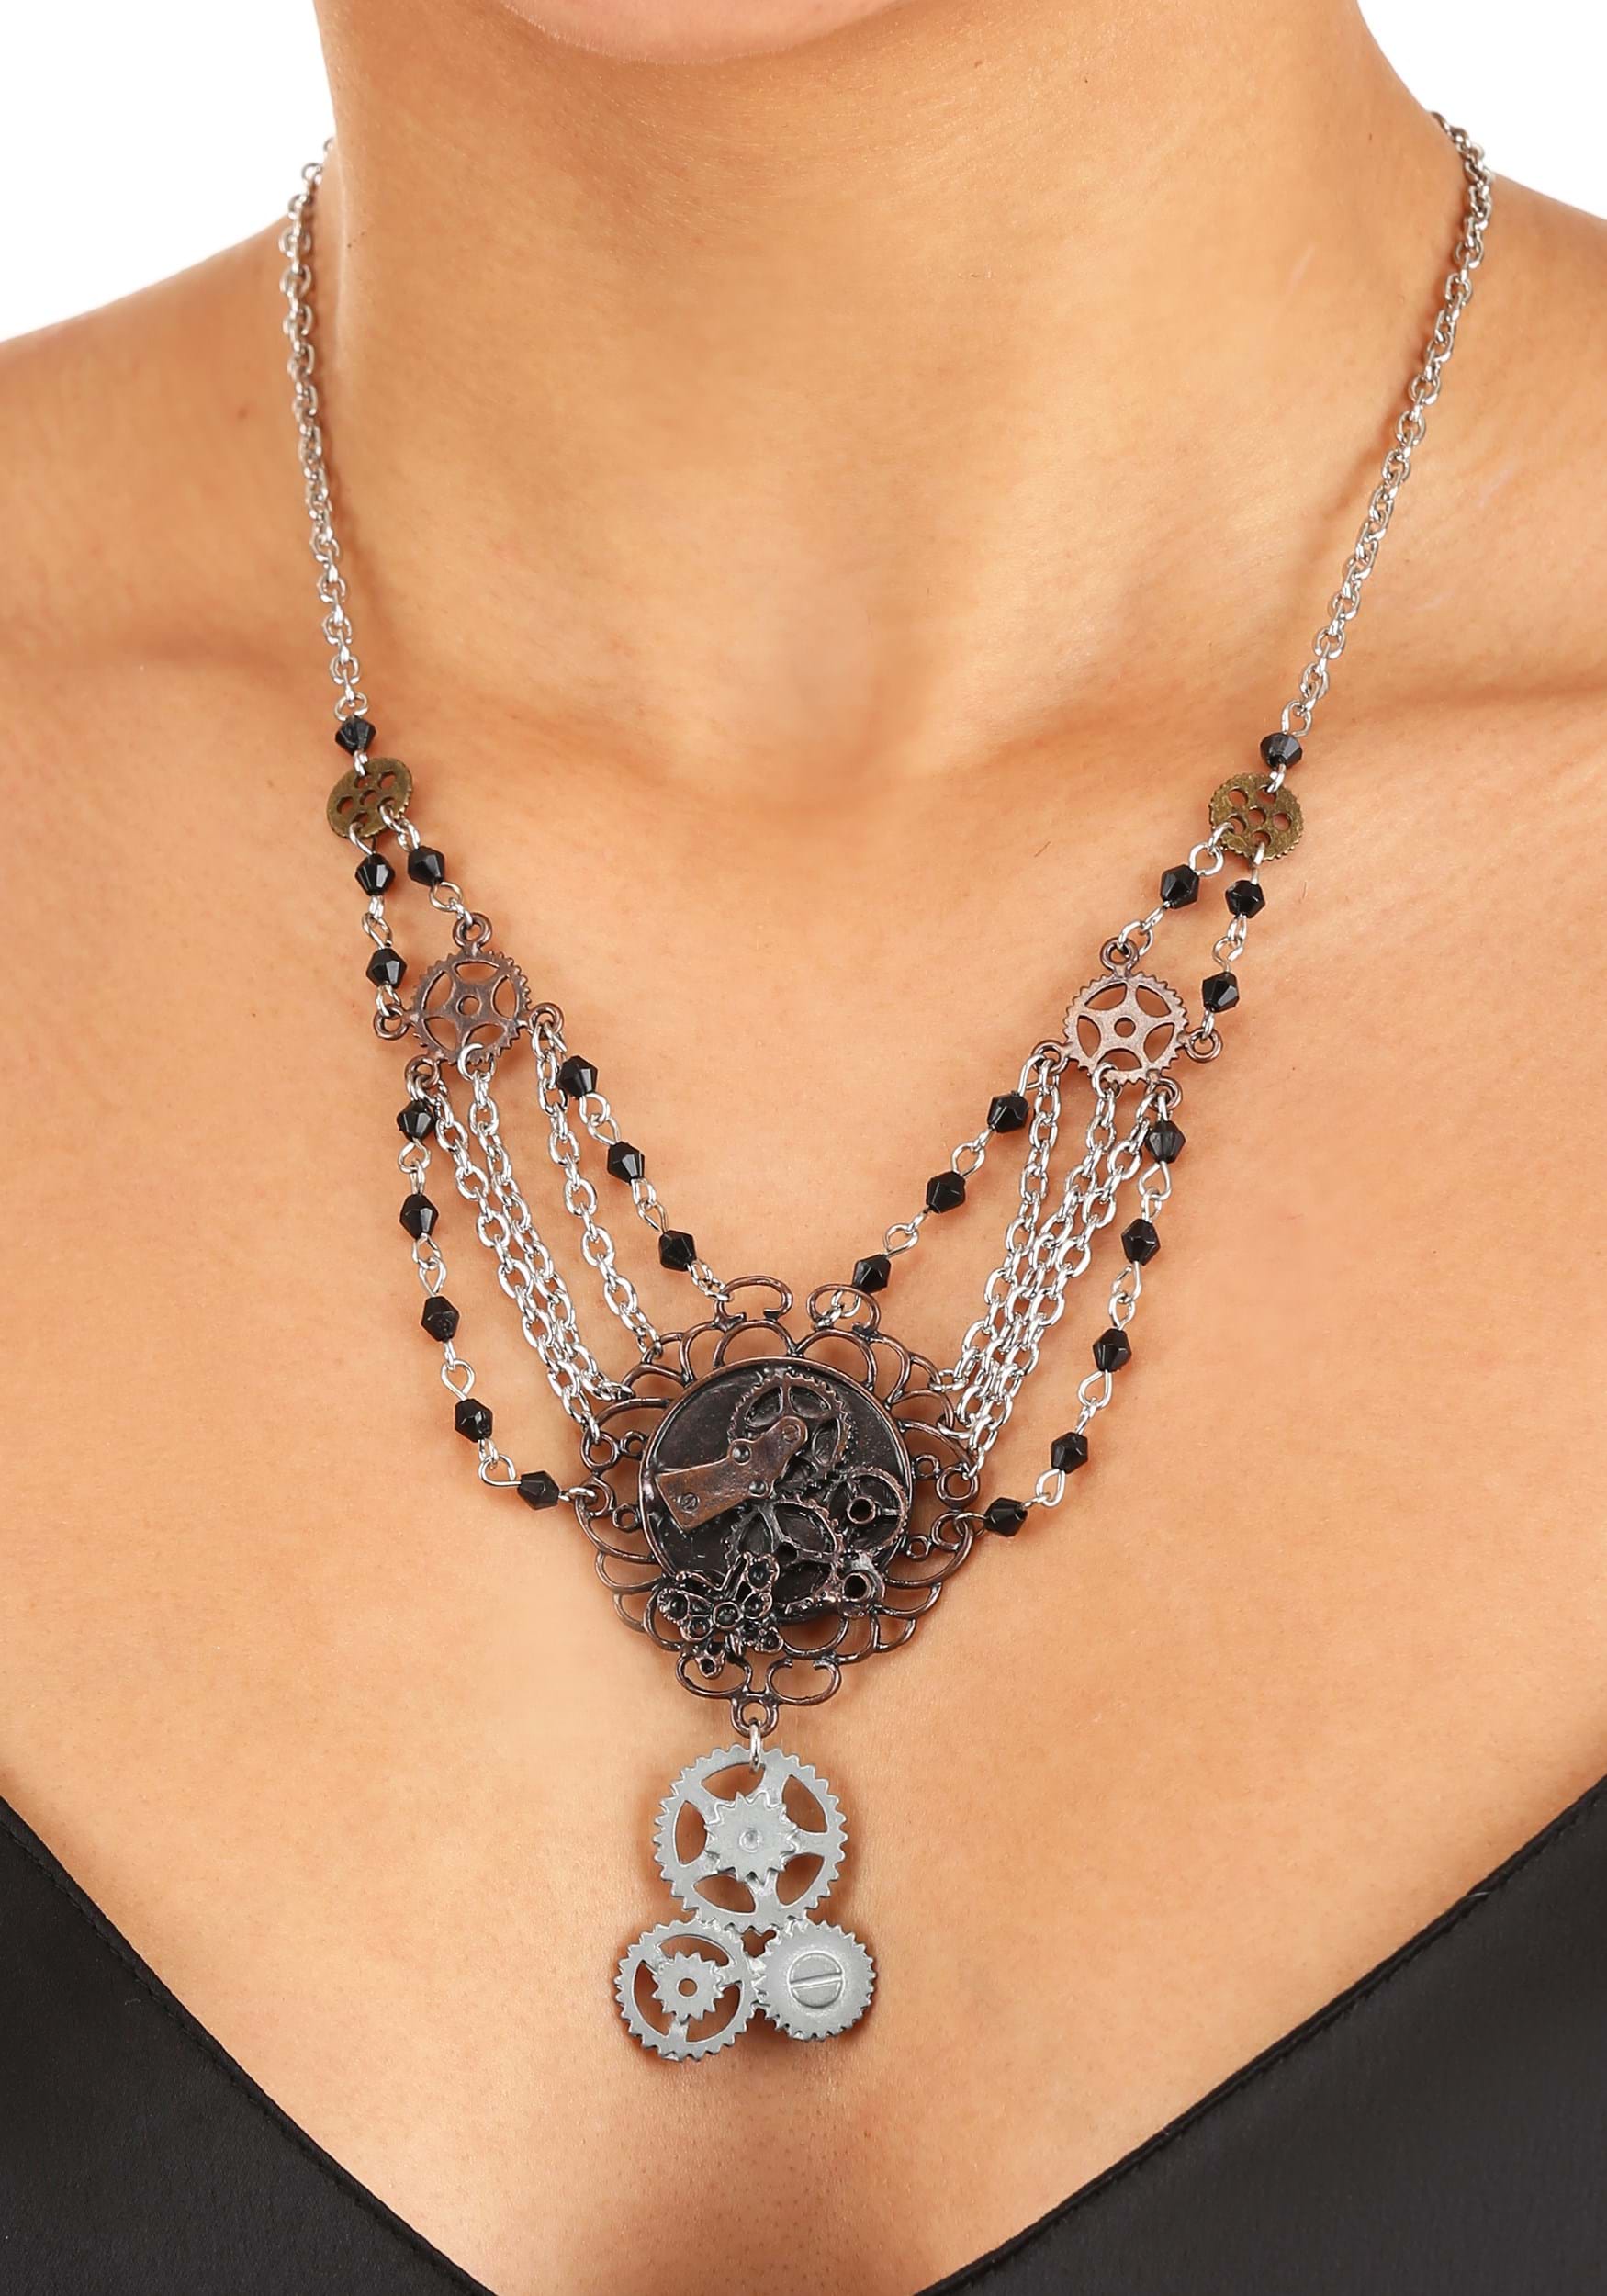 Antique Chain Gear Necklace